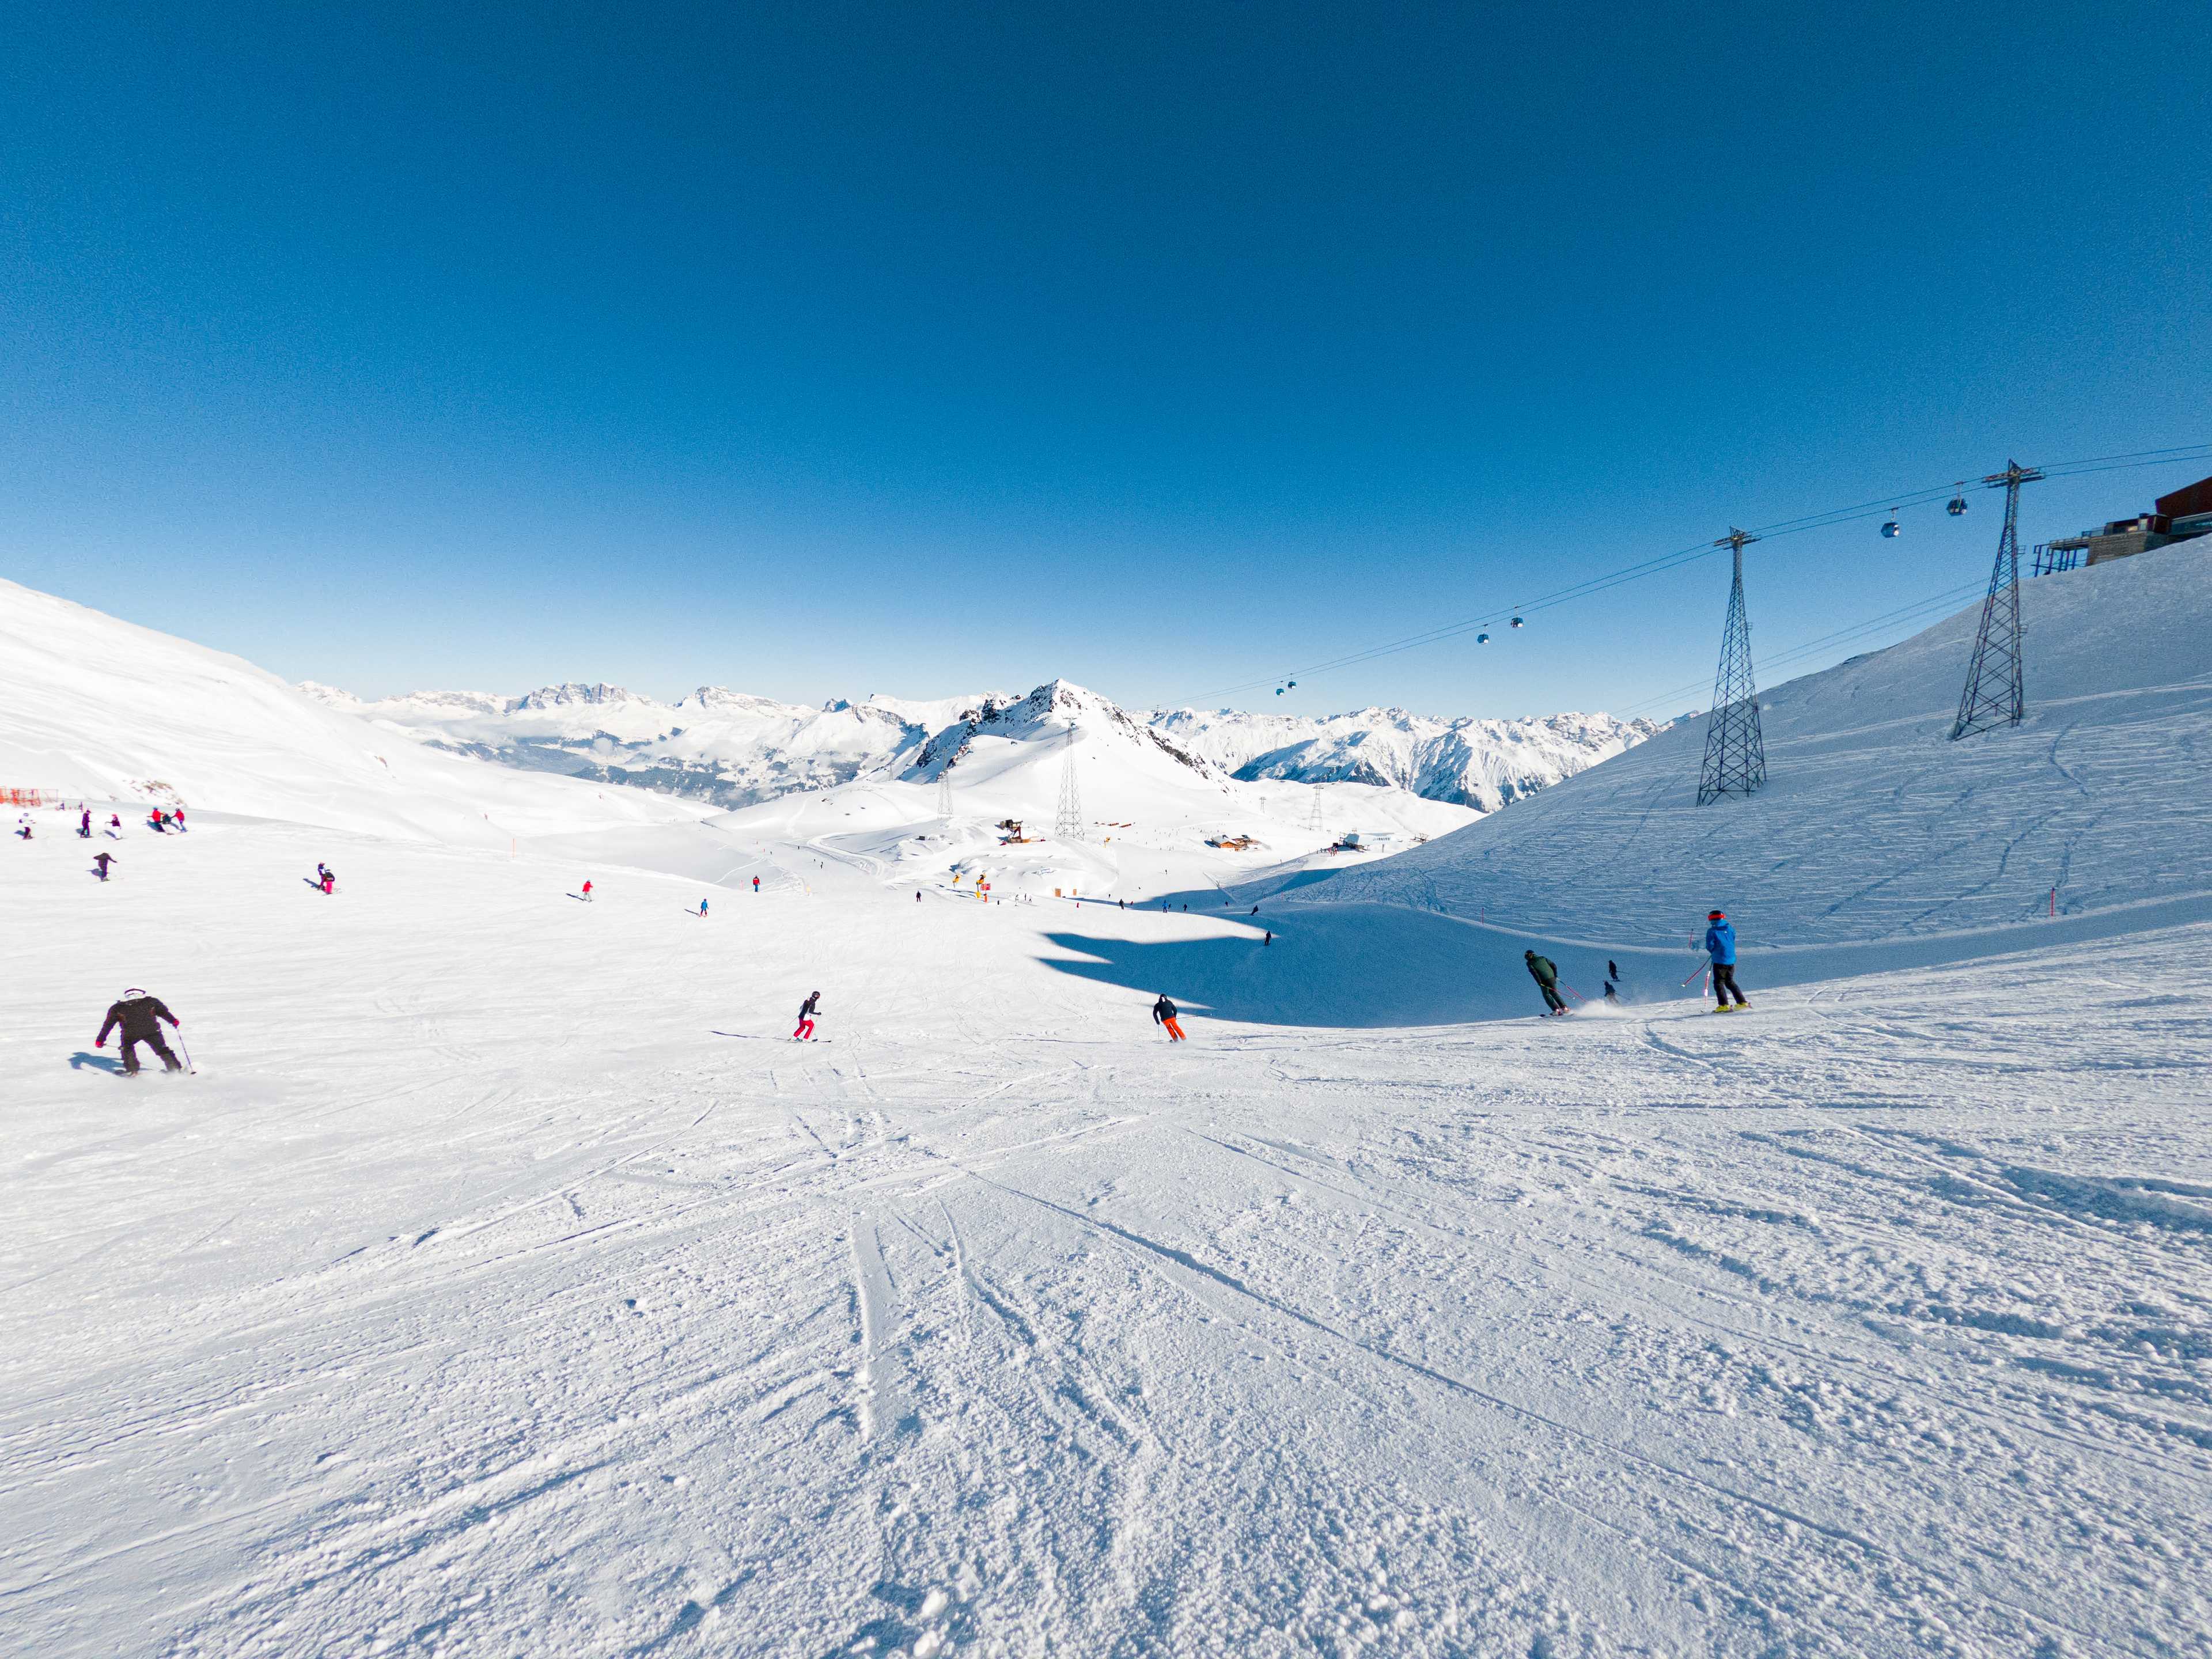 Slope no 15 starts at Weissfluhjoch, Davos